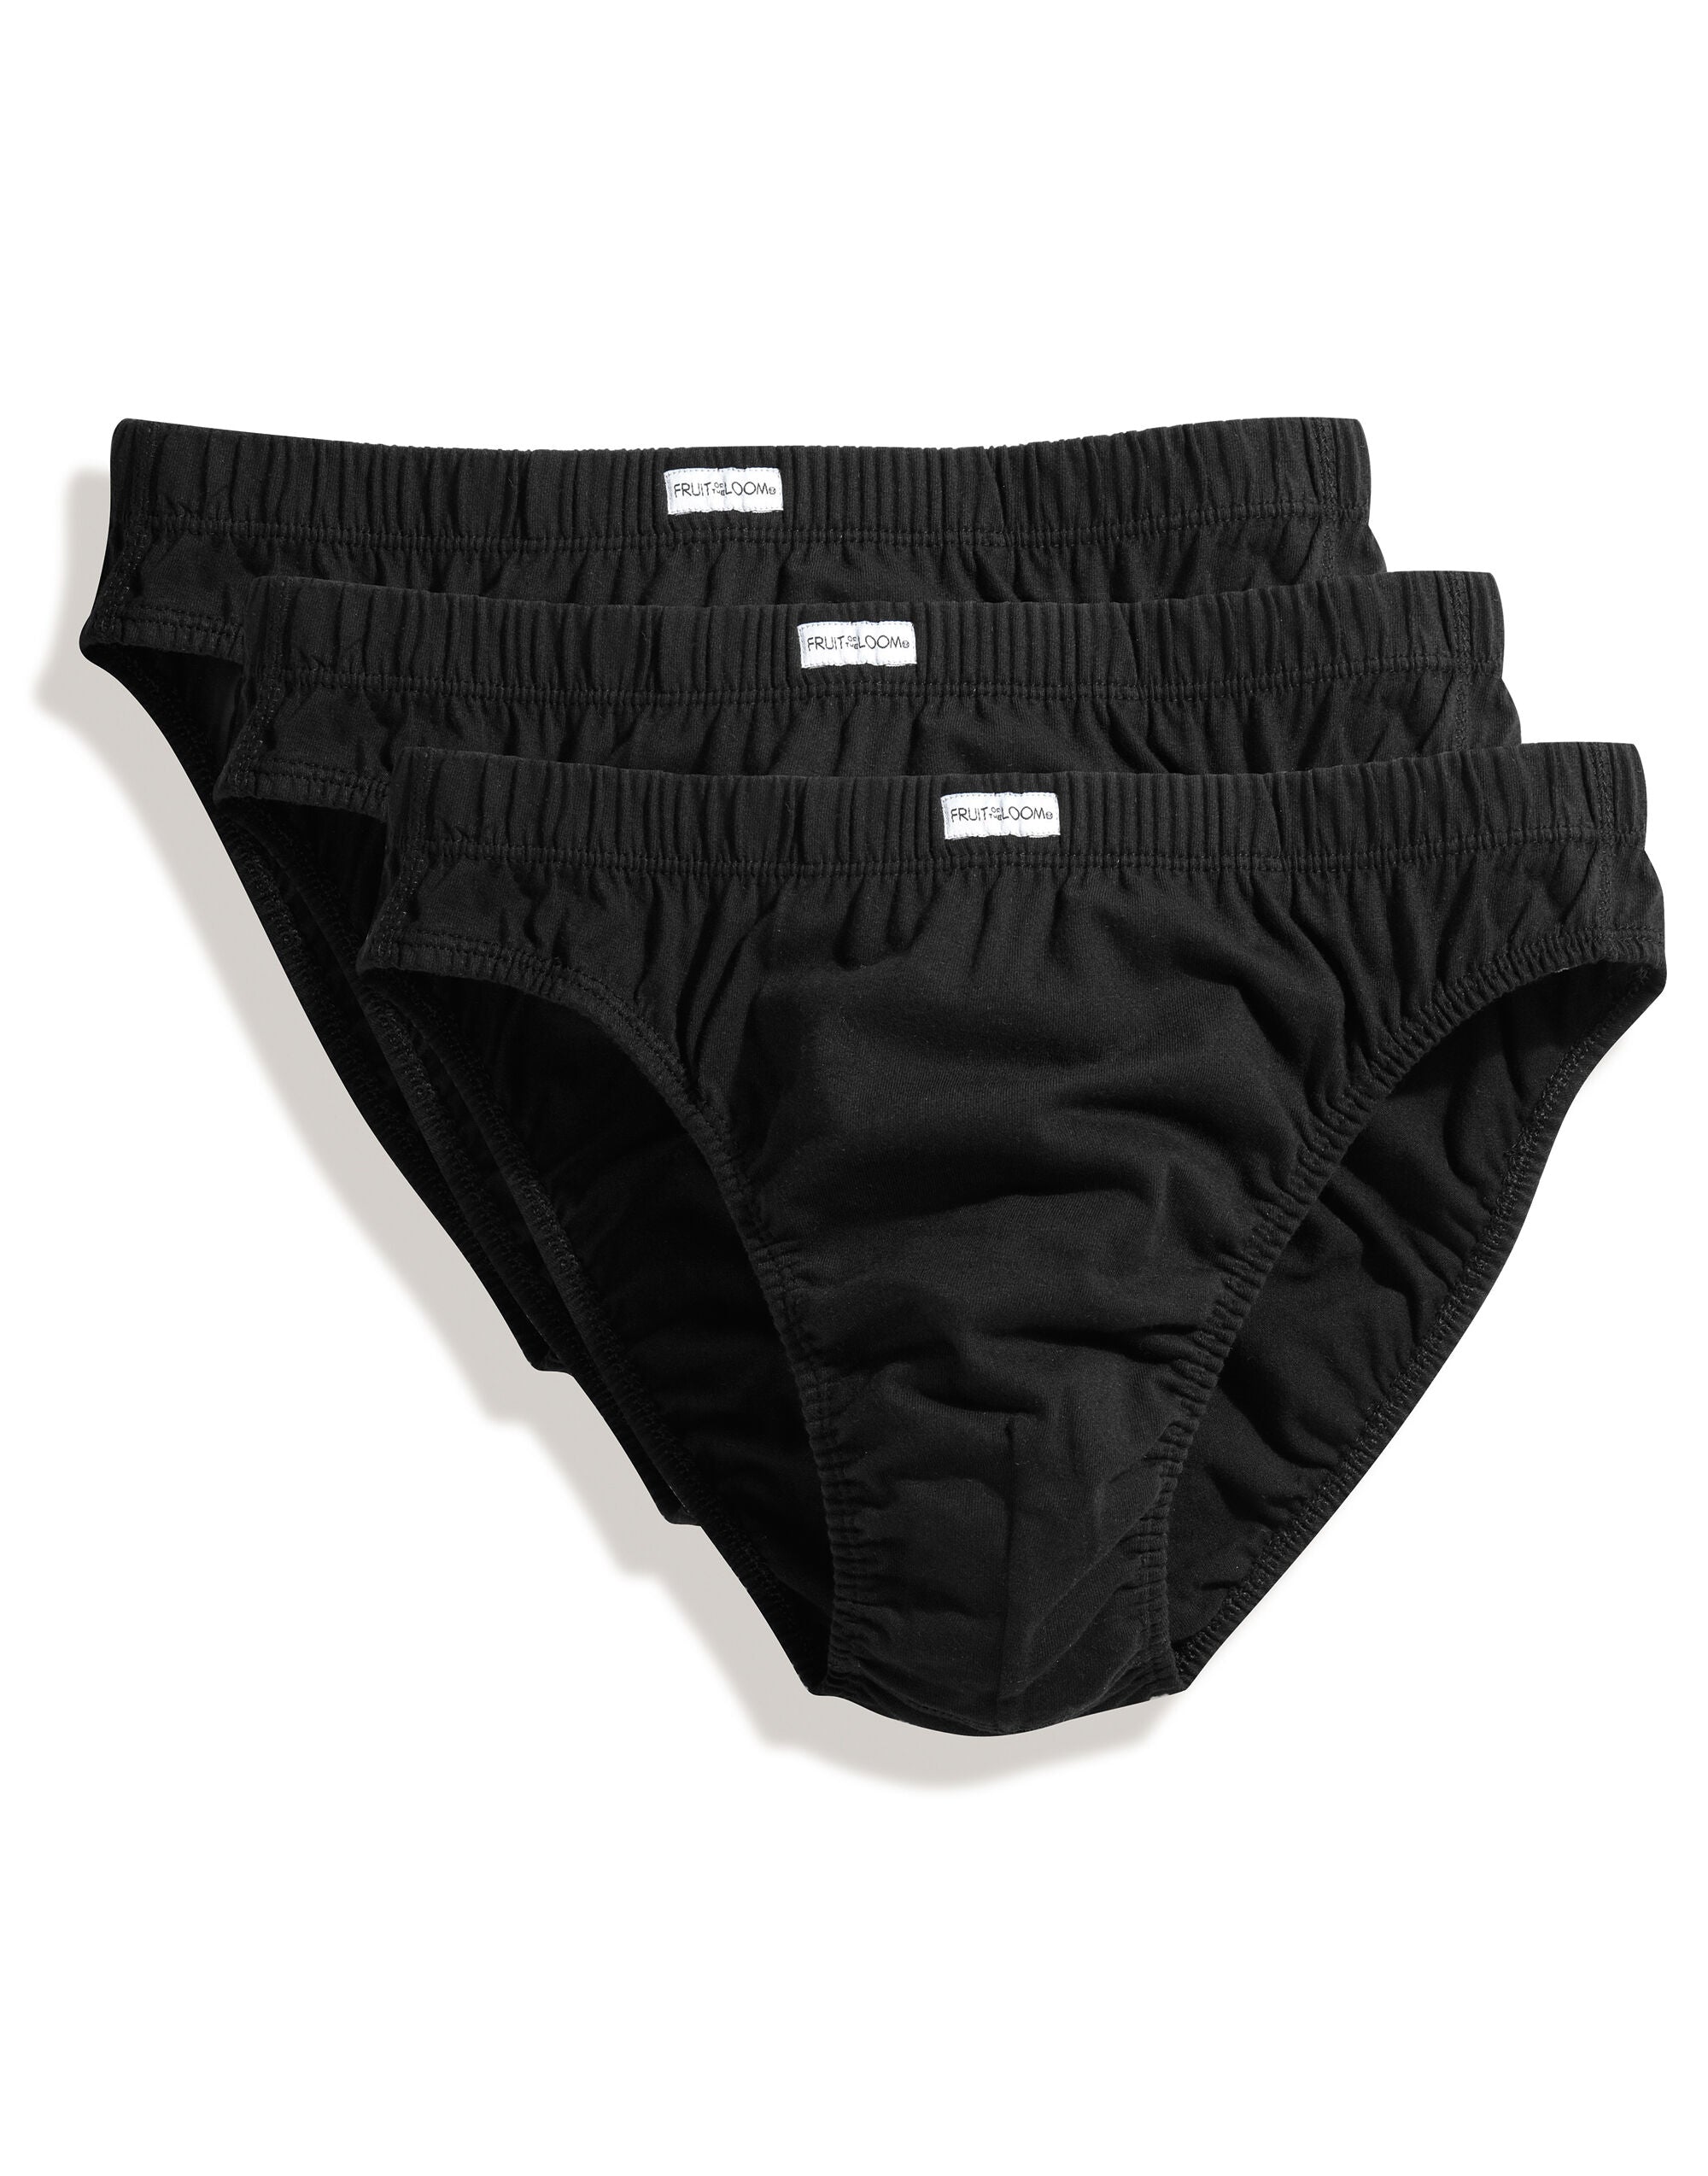 Fruit Of The Loom Underwear Men's Classic Slip (3 Pack) brief style (67012)